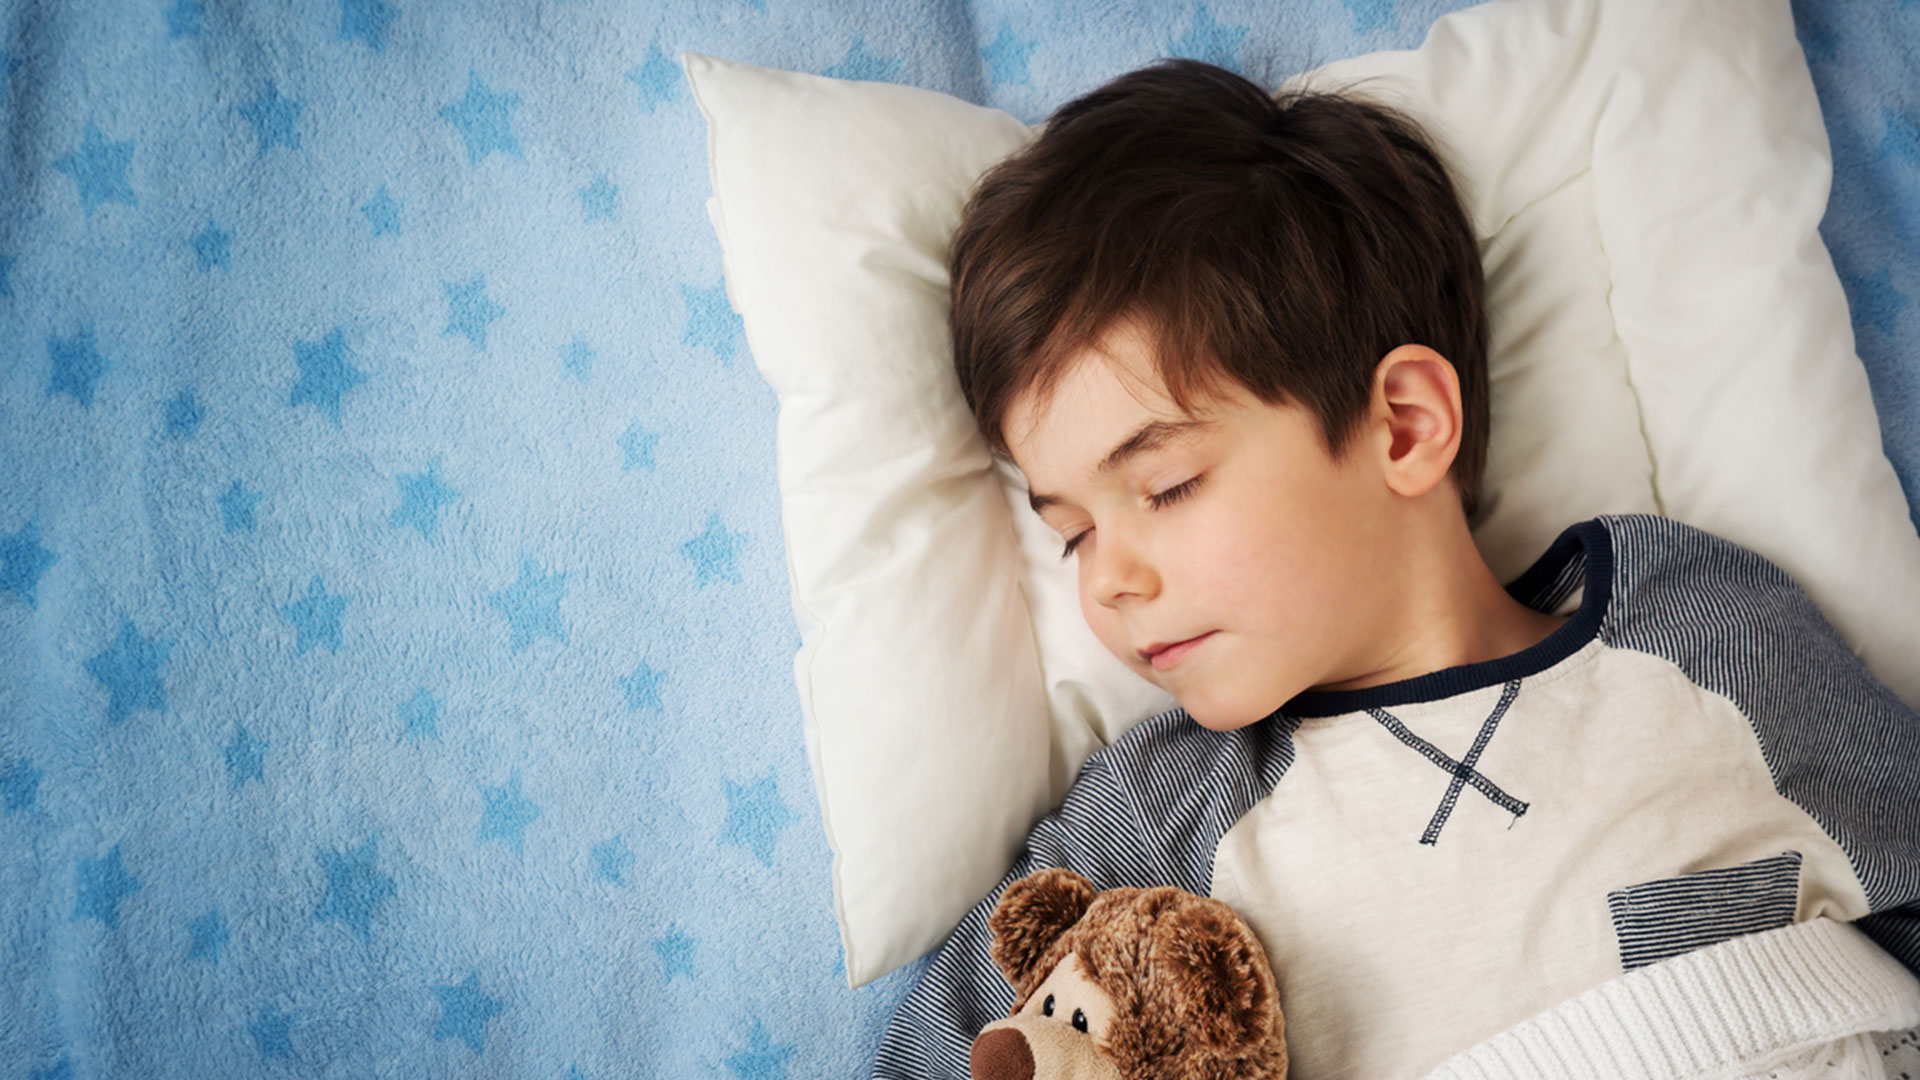 Sleep Disorders in Children